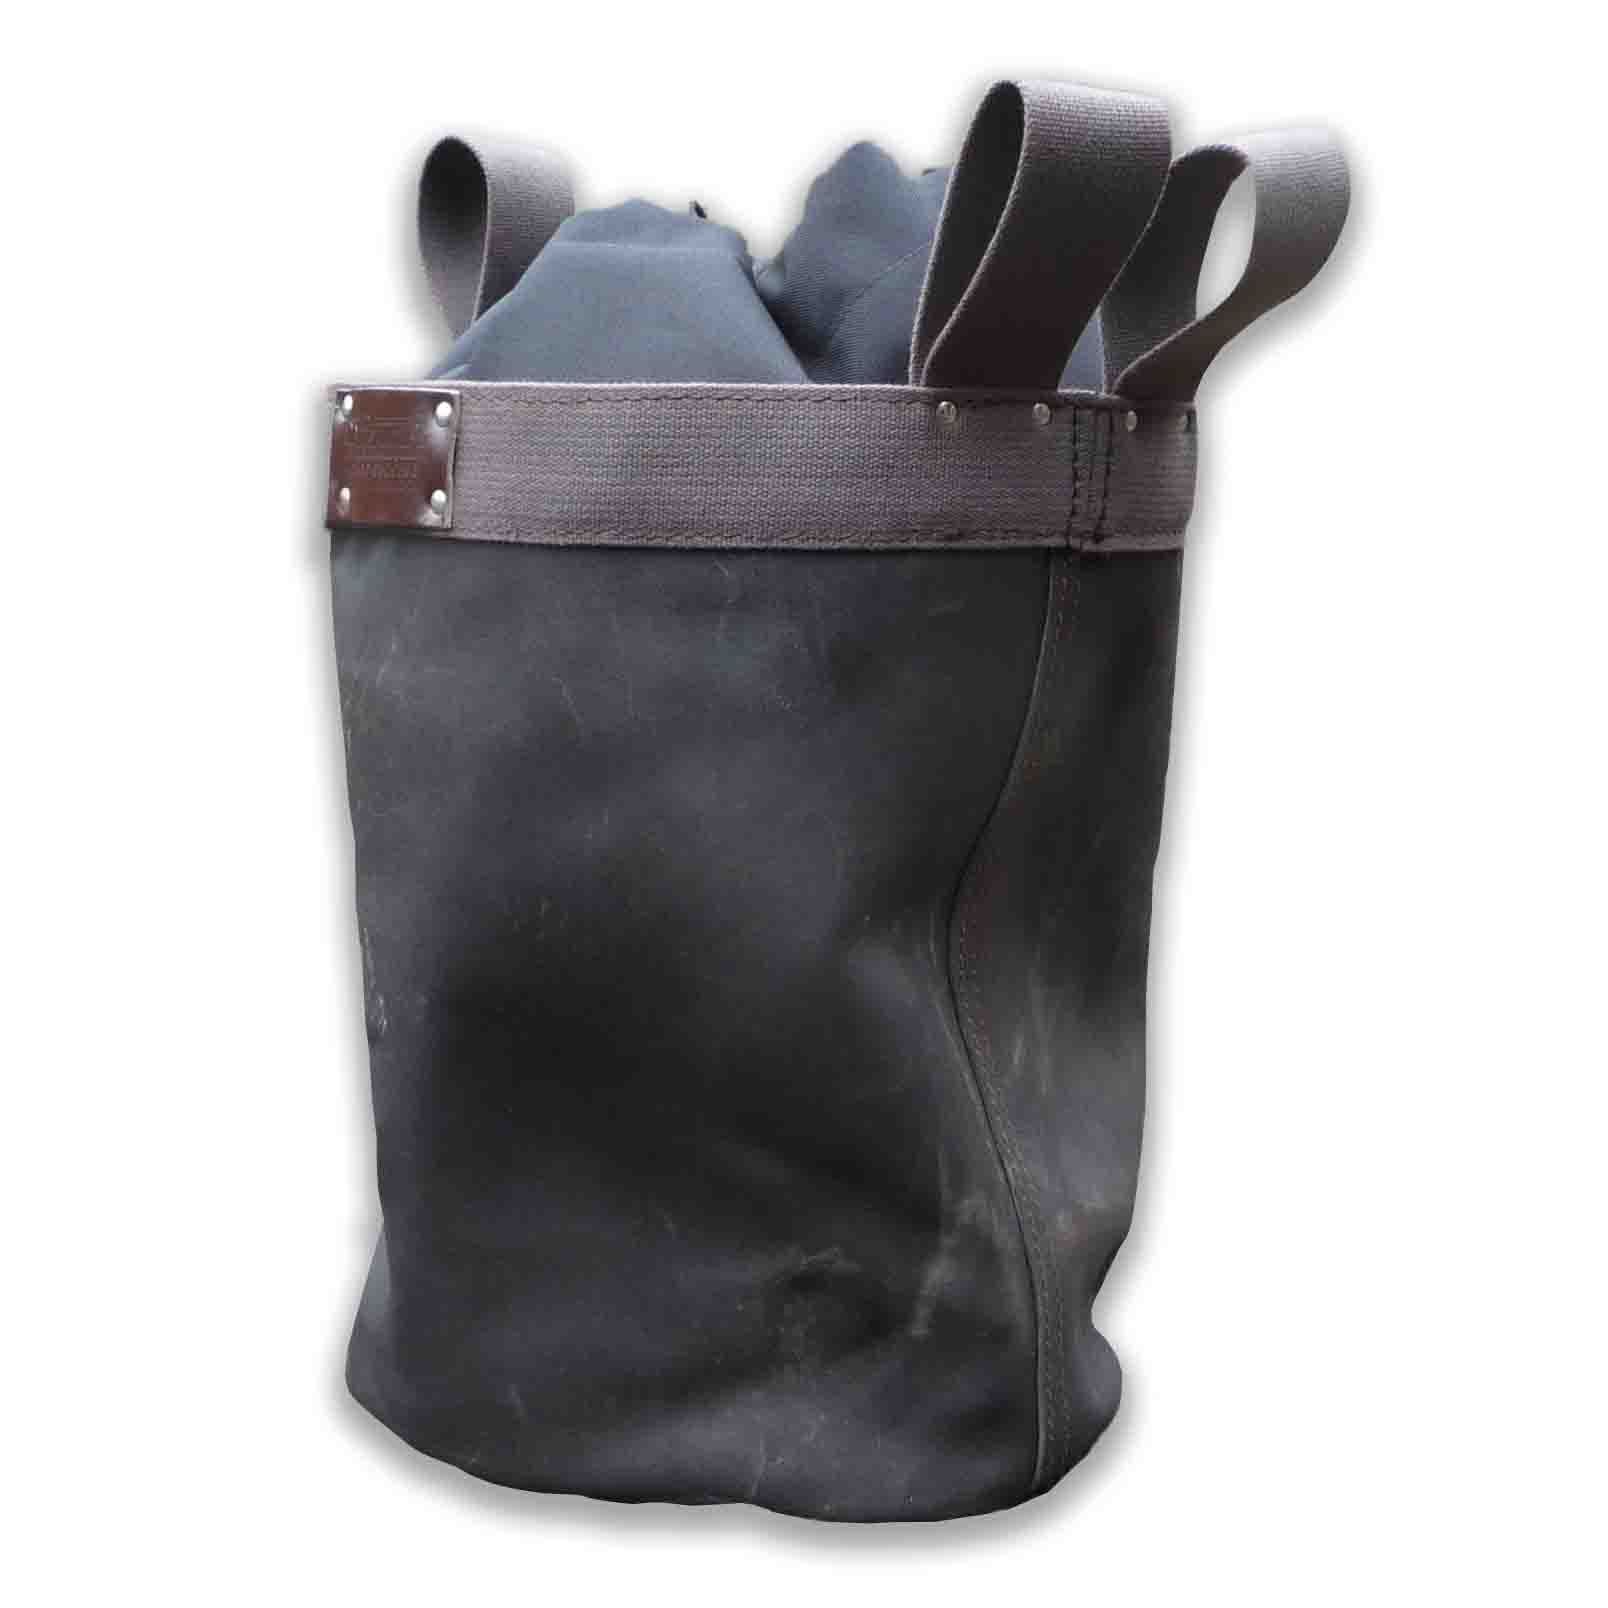 EMG ROUND LIFTING BAG BUCKET FOR ROPE ACCESS (WLL=25KG) - Lifting Bag  Warehouse